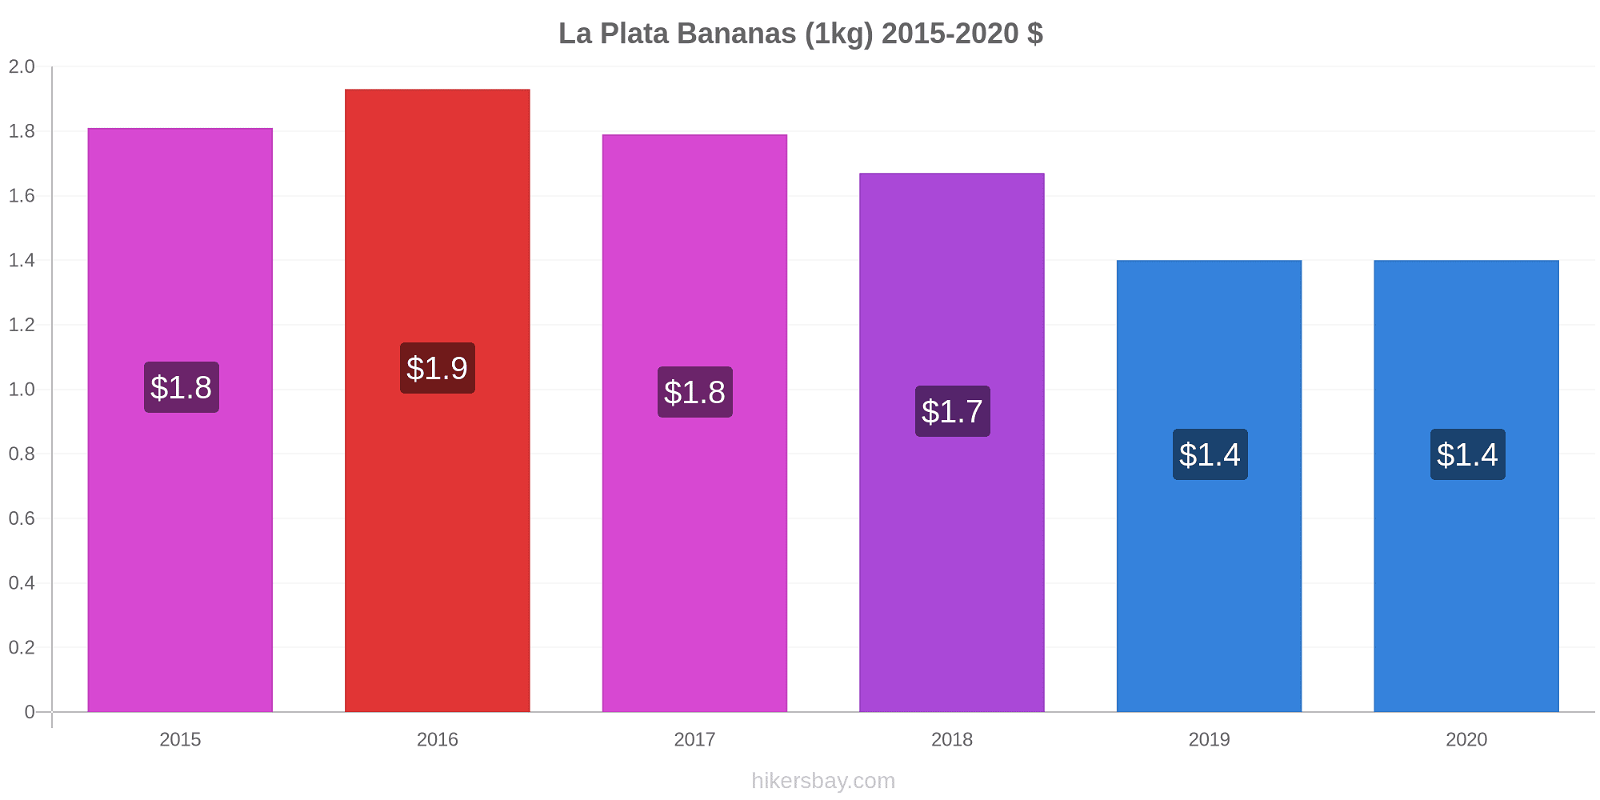 La Plata price changes Bananas (1kg) hikersbay.com